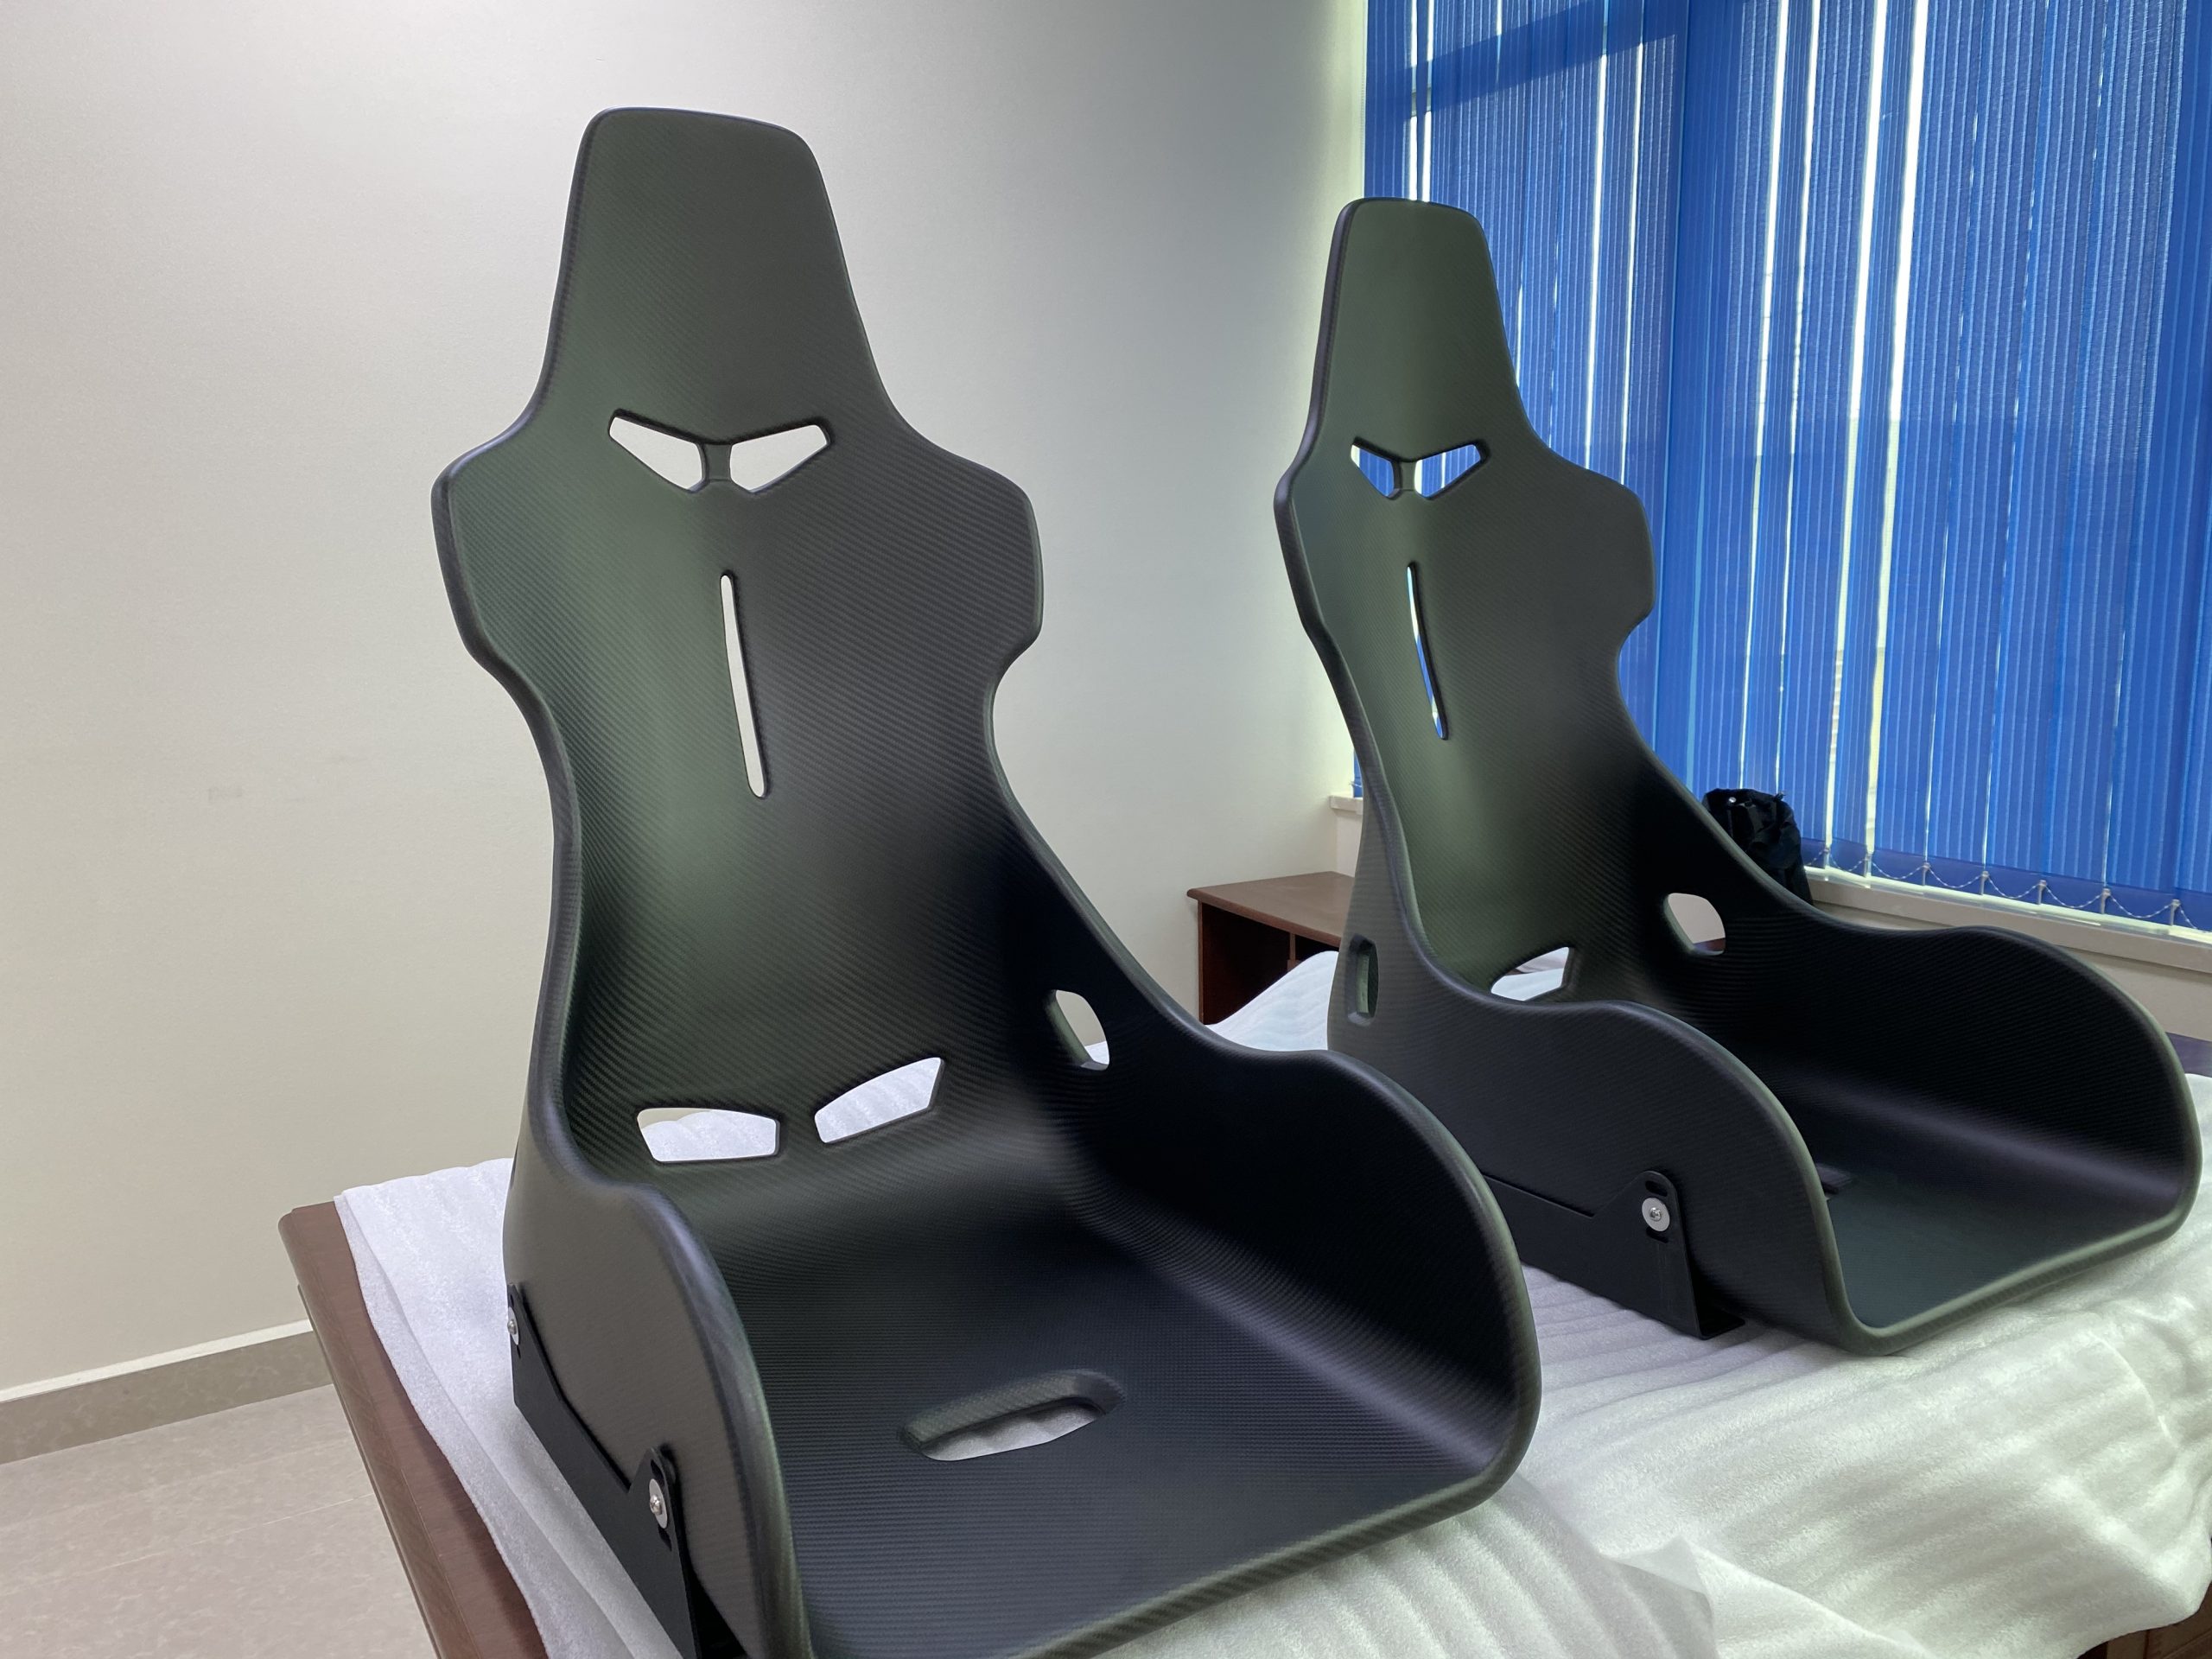 DMC Bucket Seat: Carbon Fiber Race Chair inspired by the McLaren